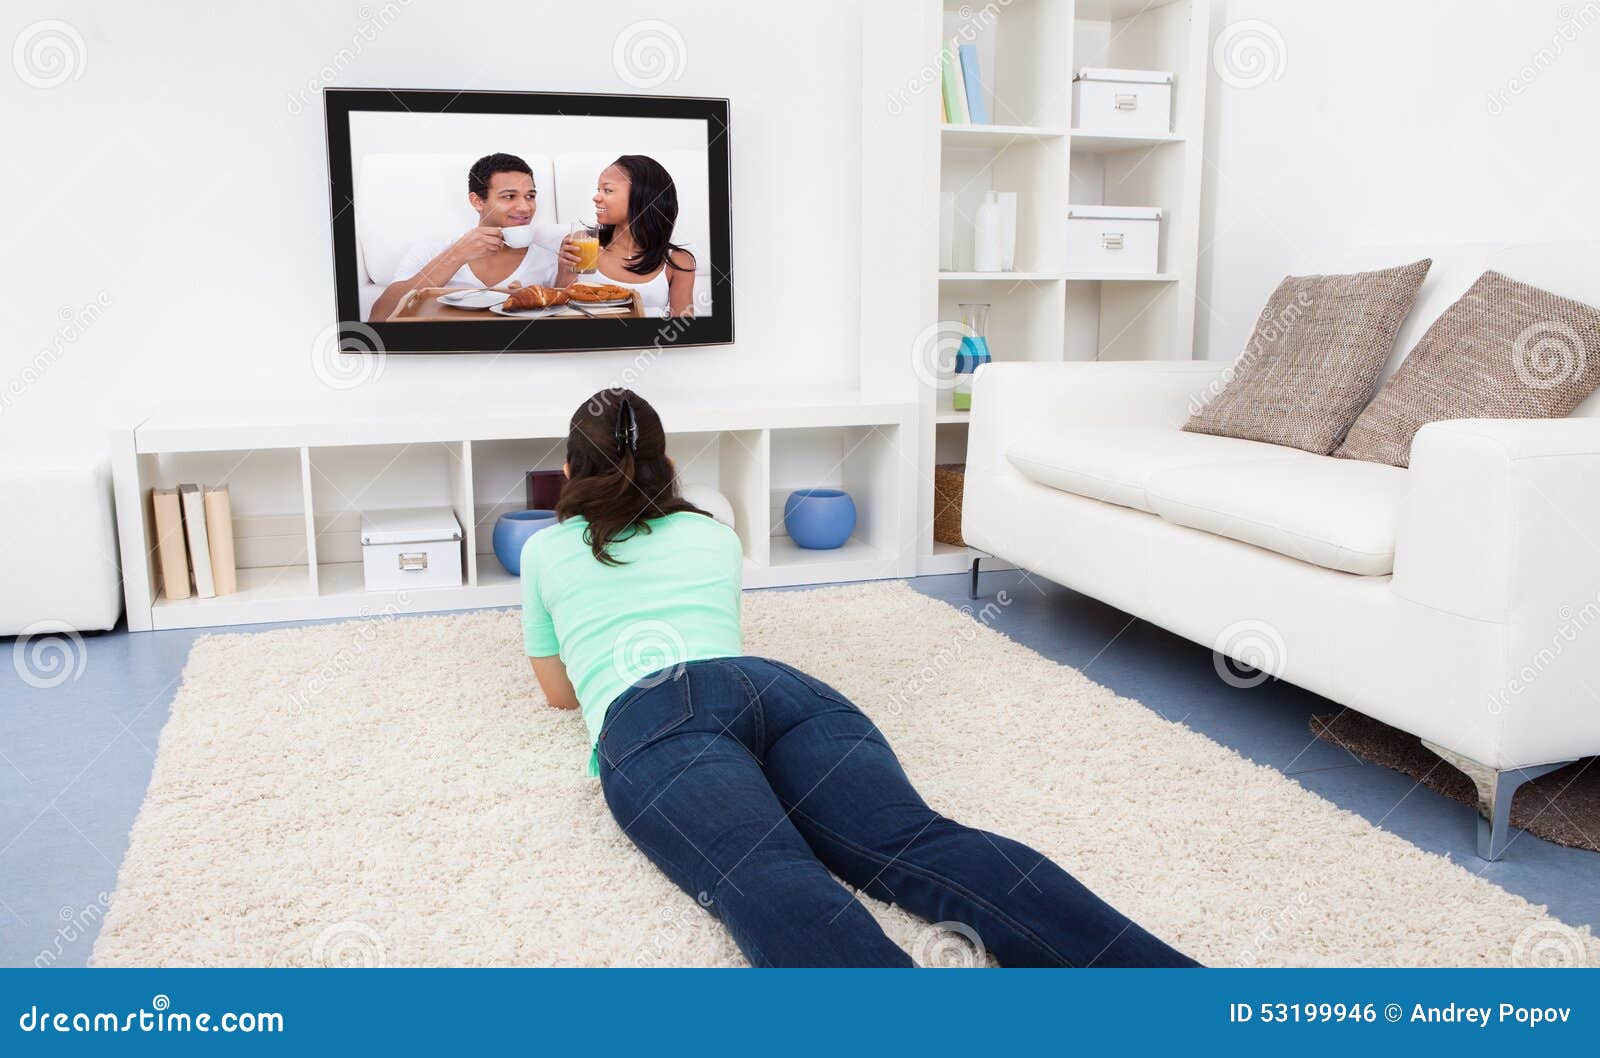 Пока муж смотрит телевизор жена